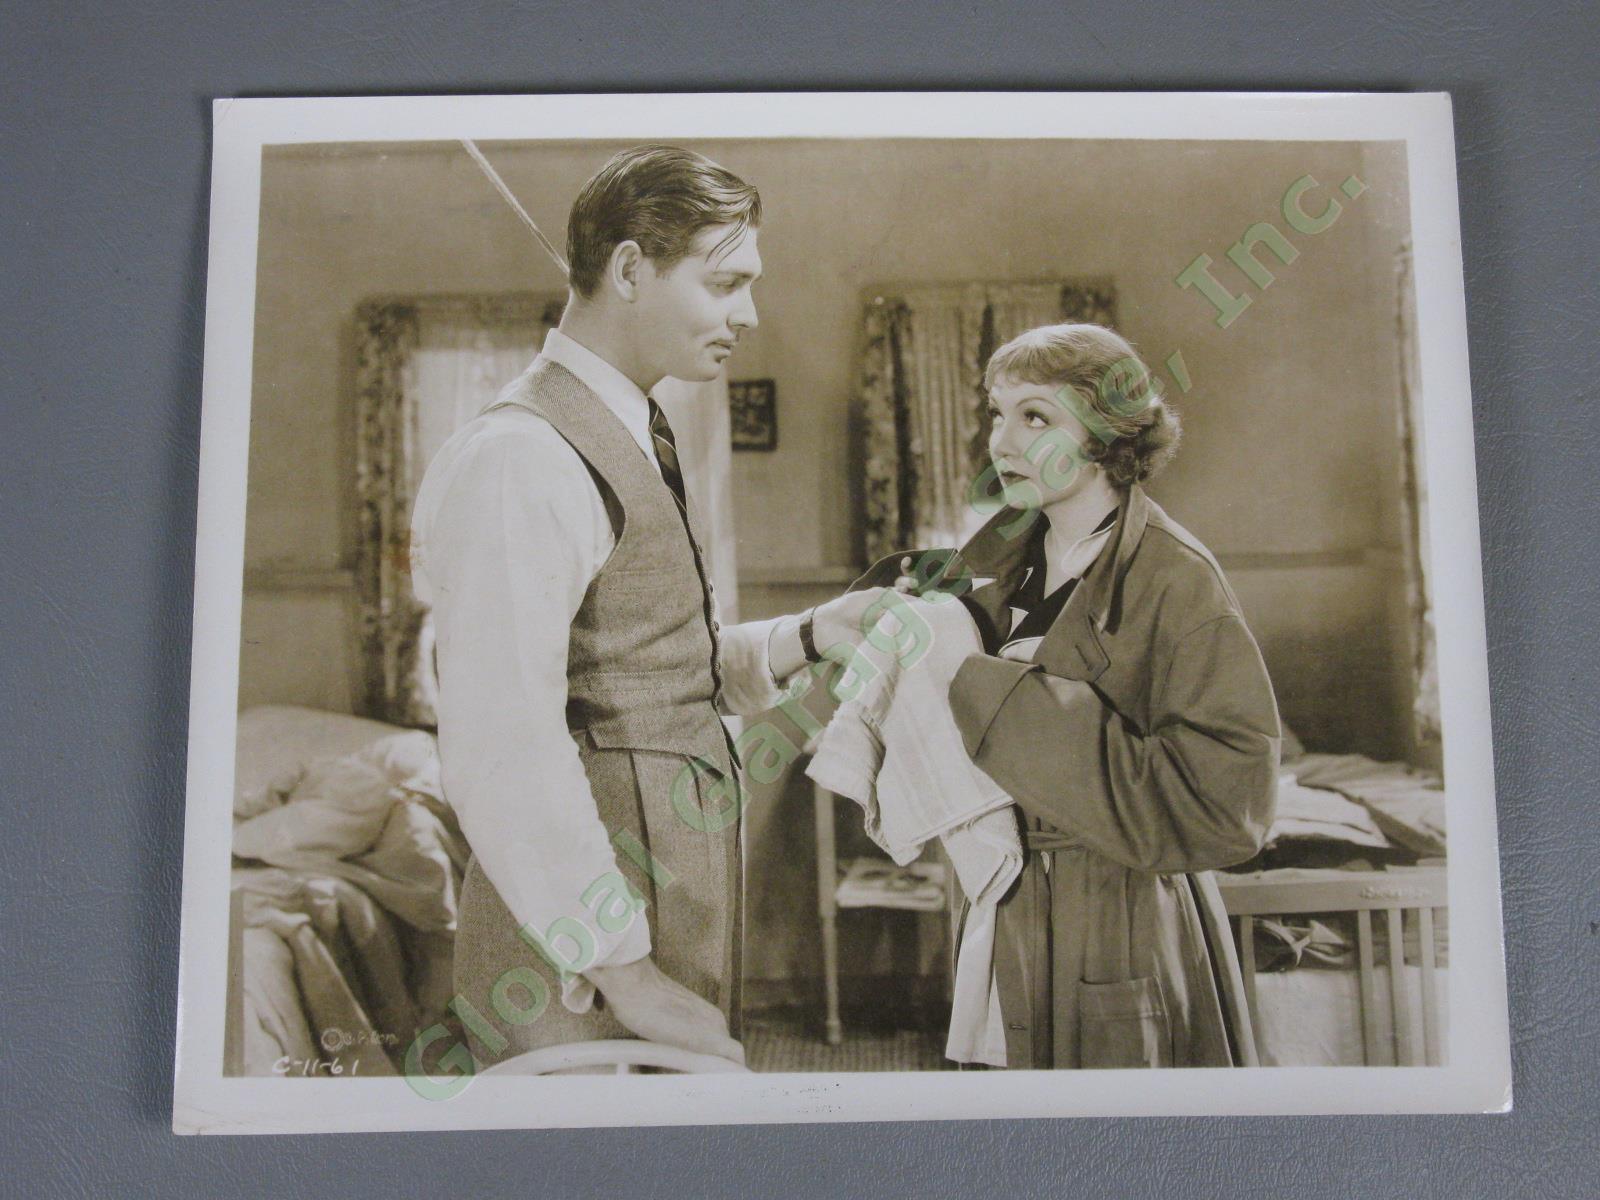 1934 Clark Gable Claudette Colbert 
It Happened One Night Movie Still Photo Lot 9